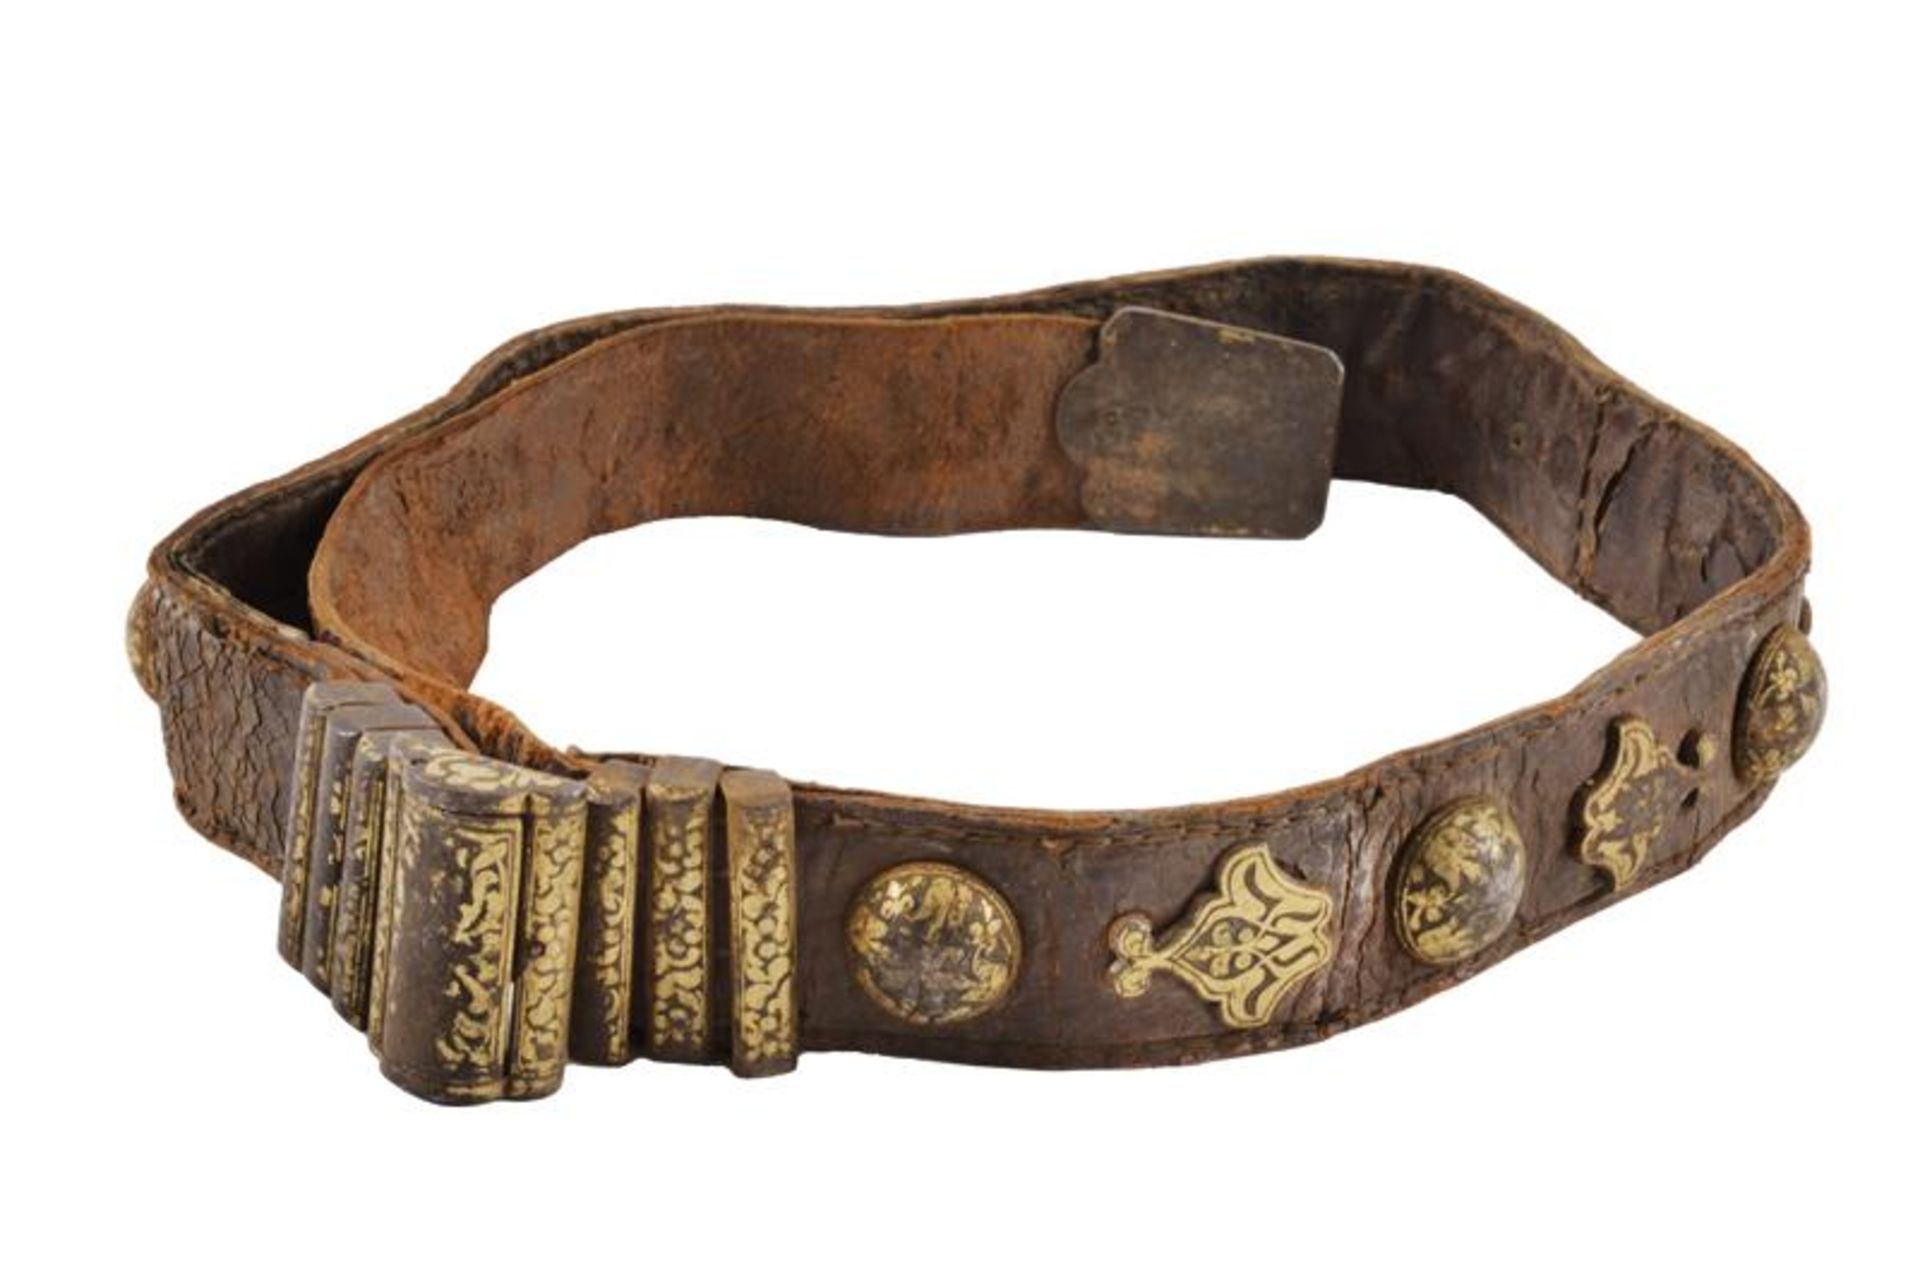 A rare kindjal belt